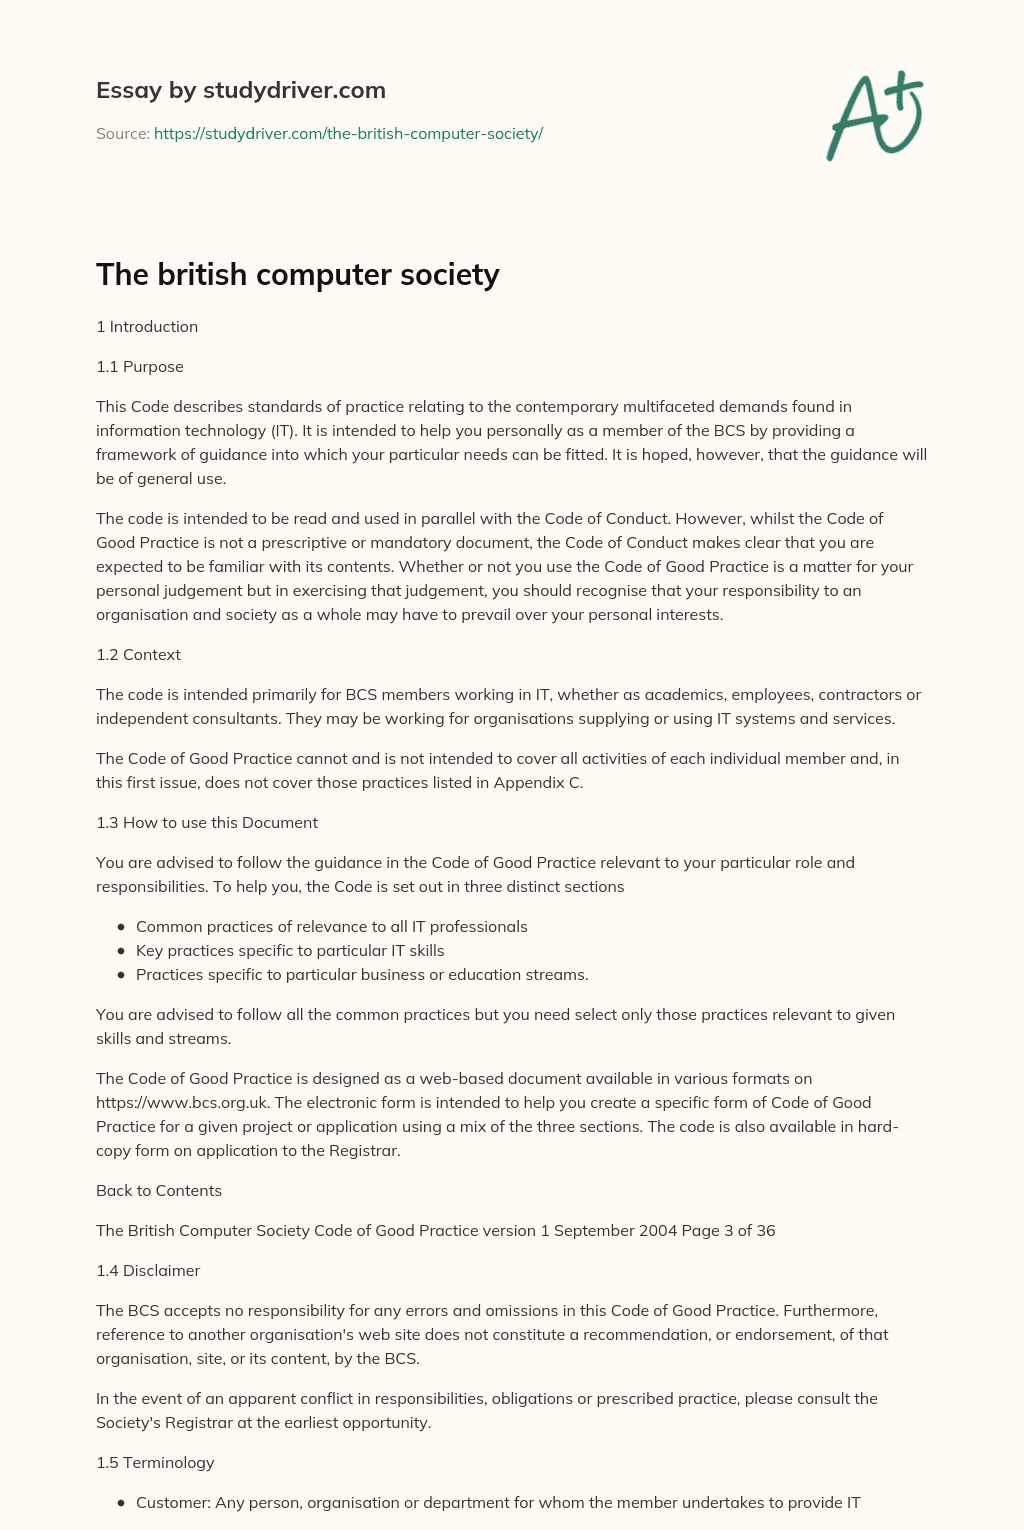 The British Computer Society essay